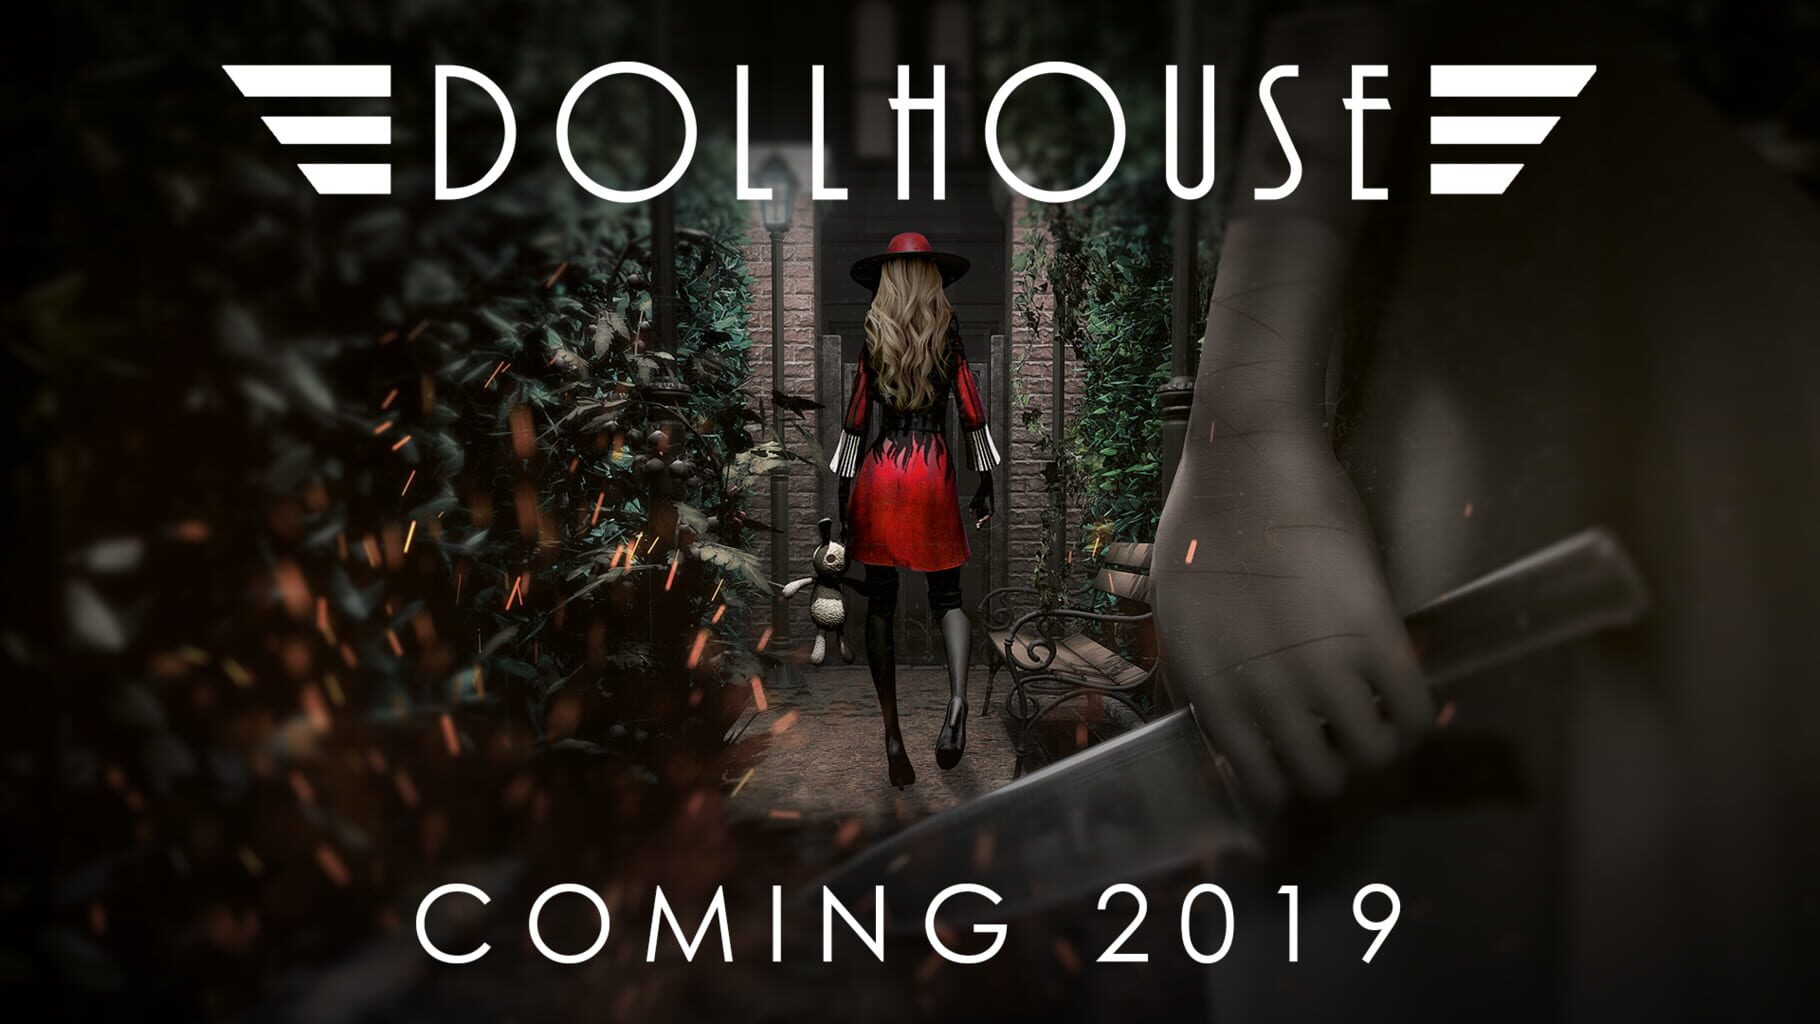 Dollhouse artwork